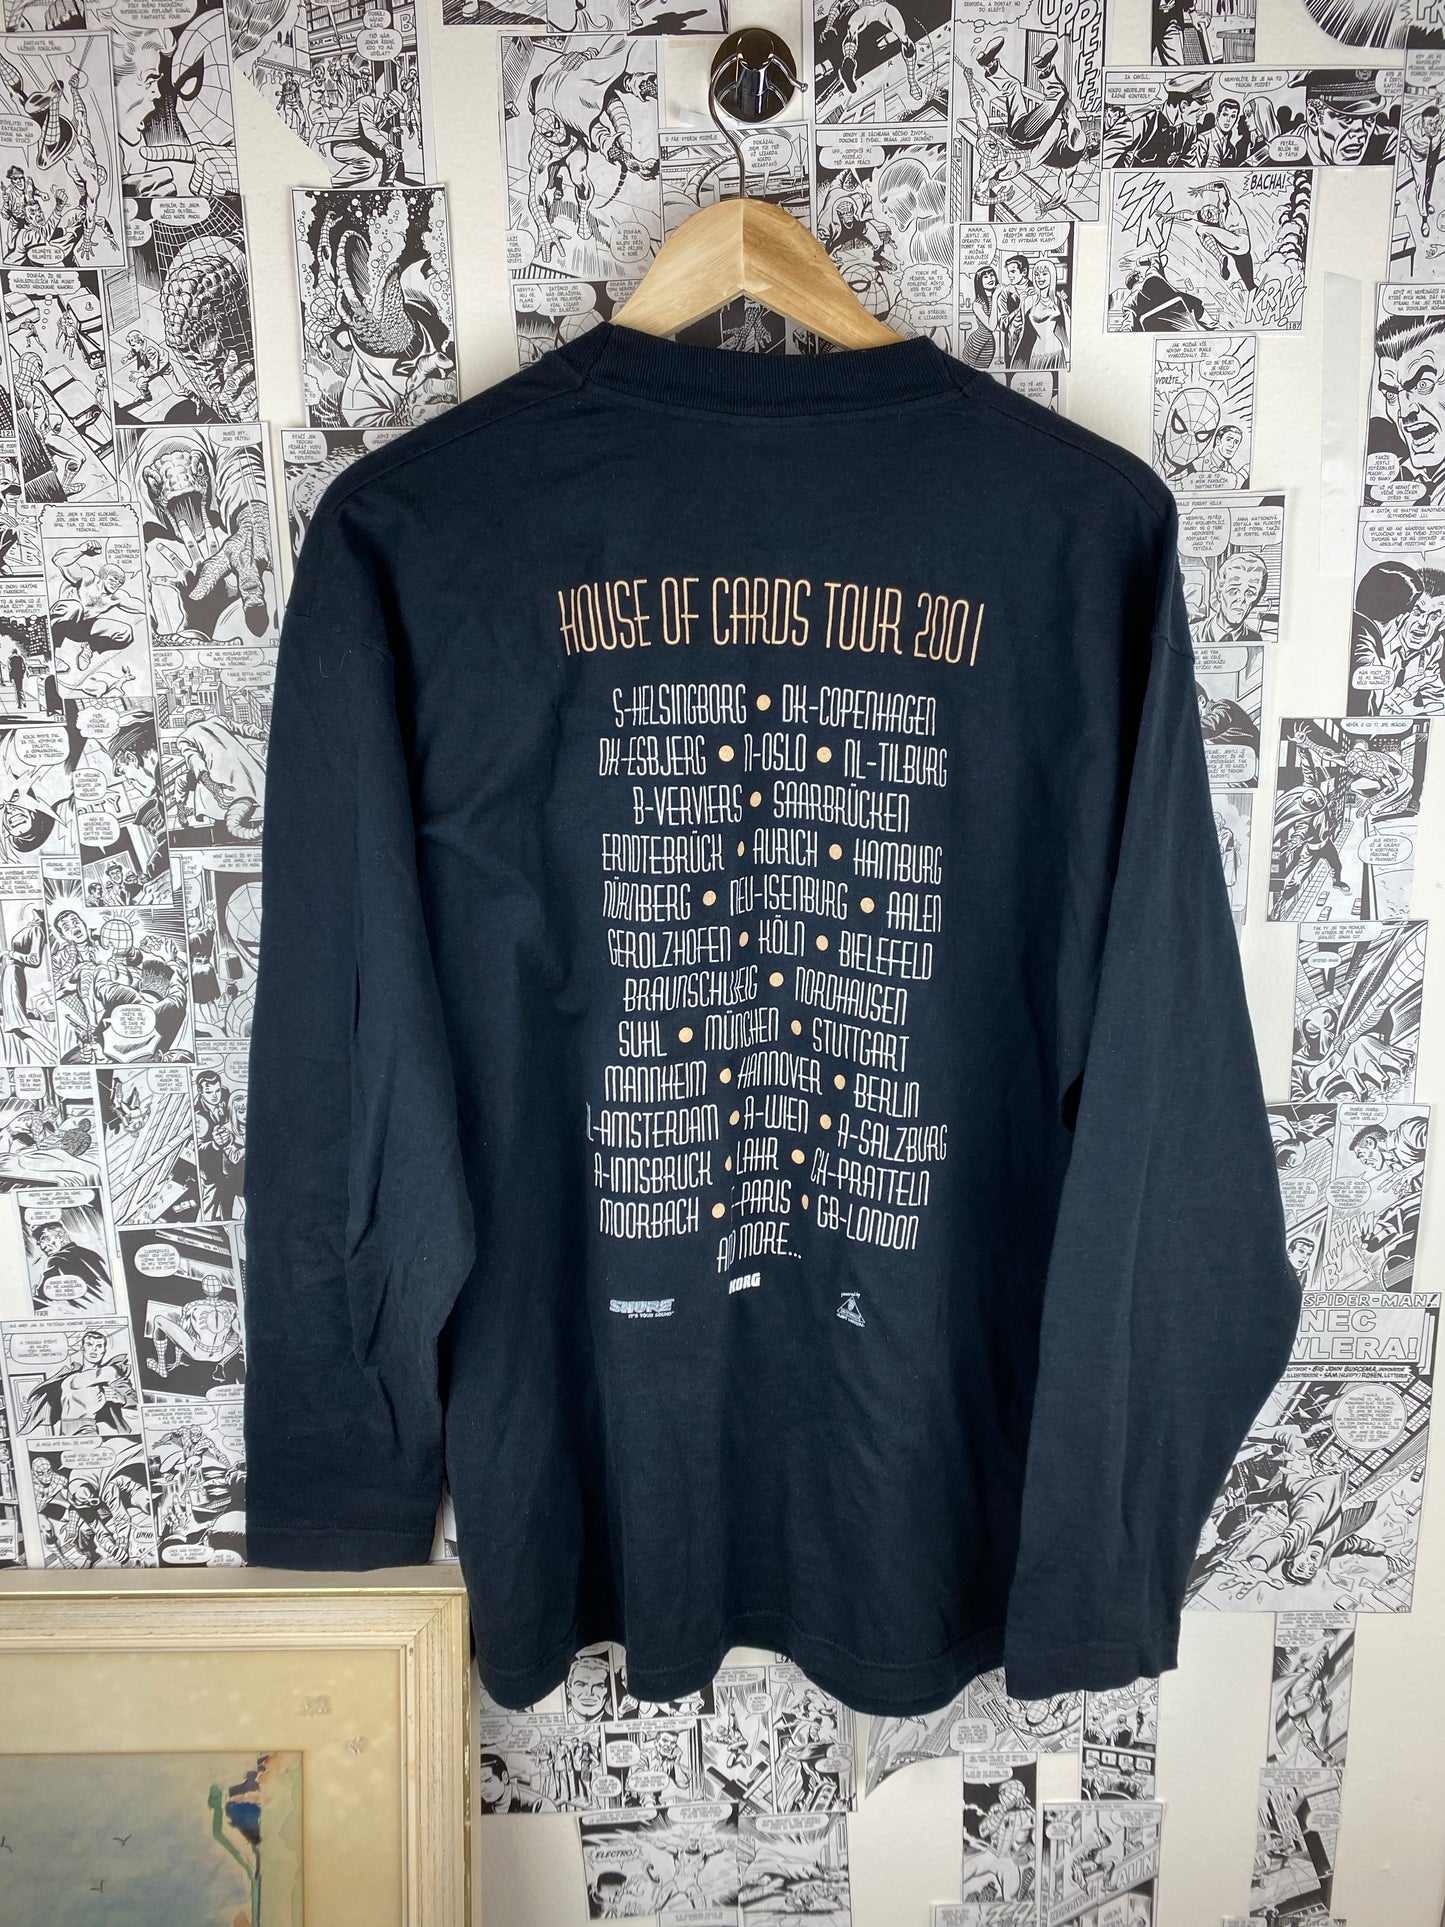 Vintage Saga “House of Cards” 2001 tour t-shirt - size L